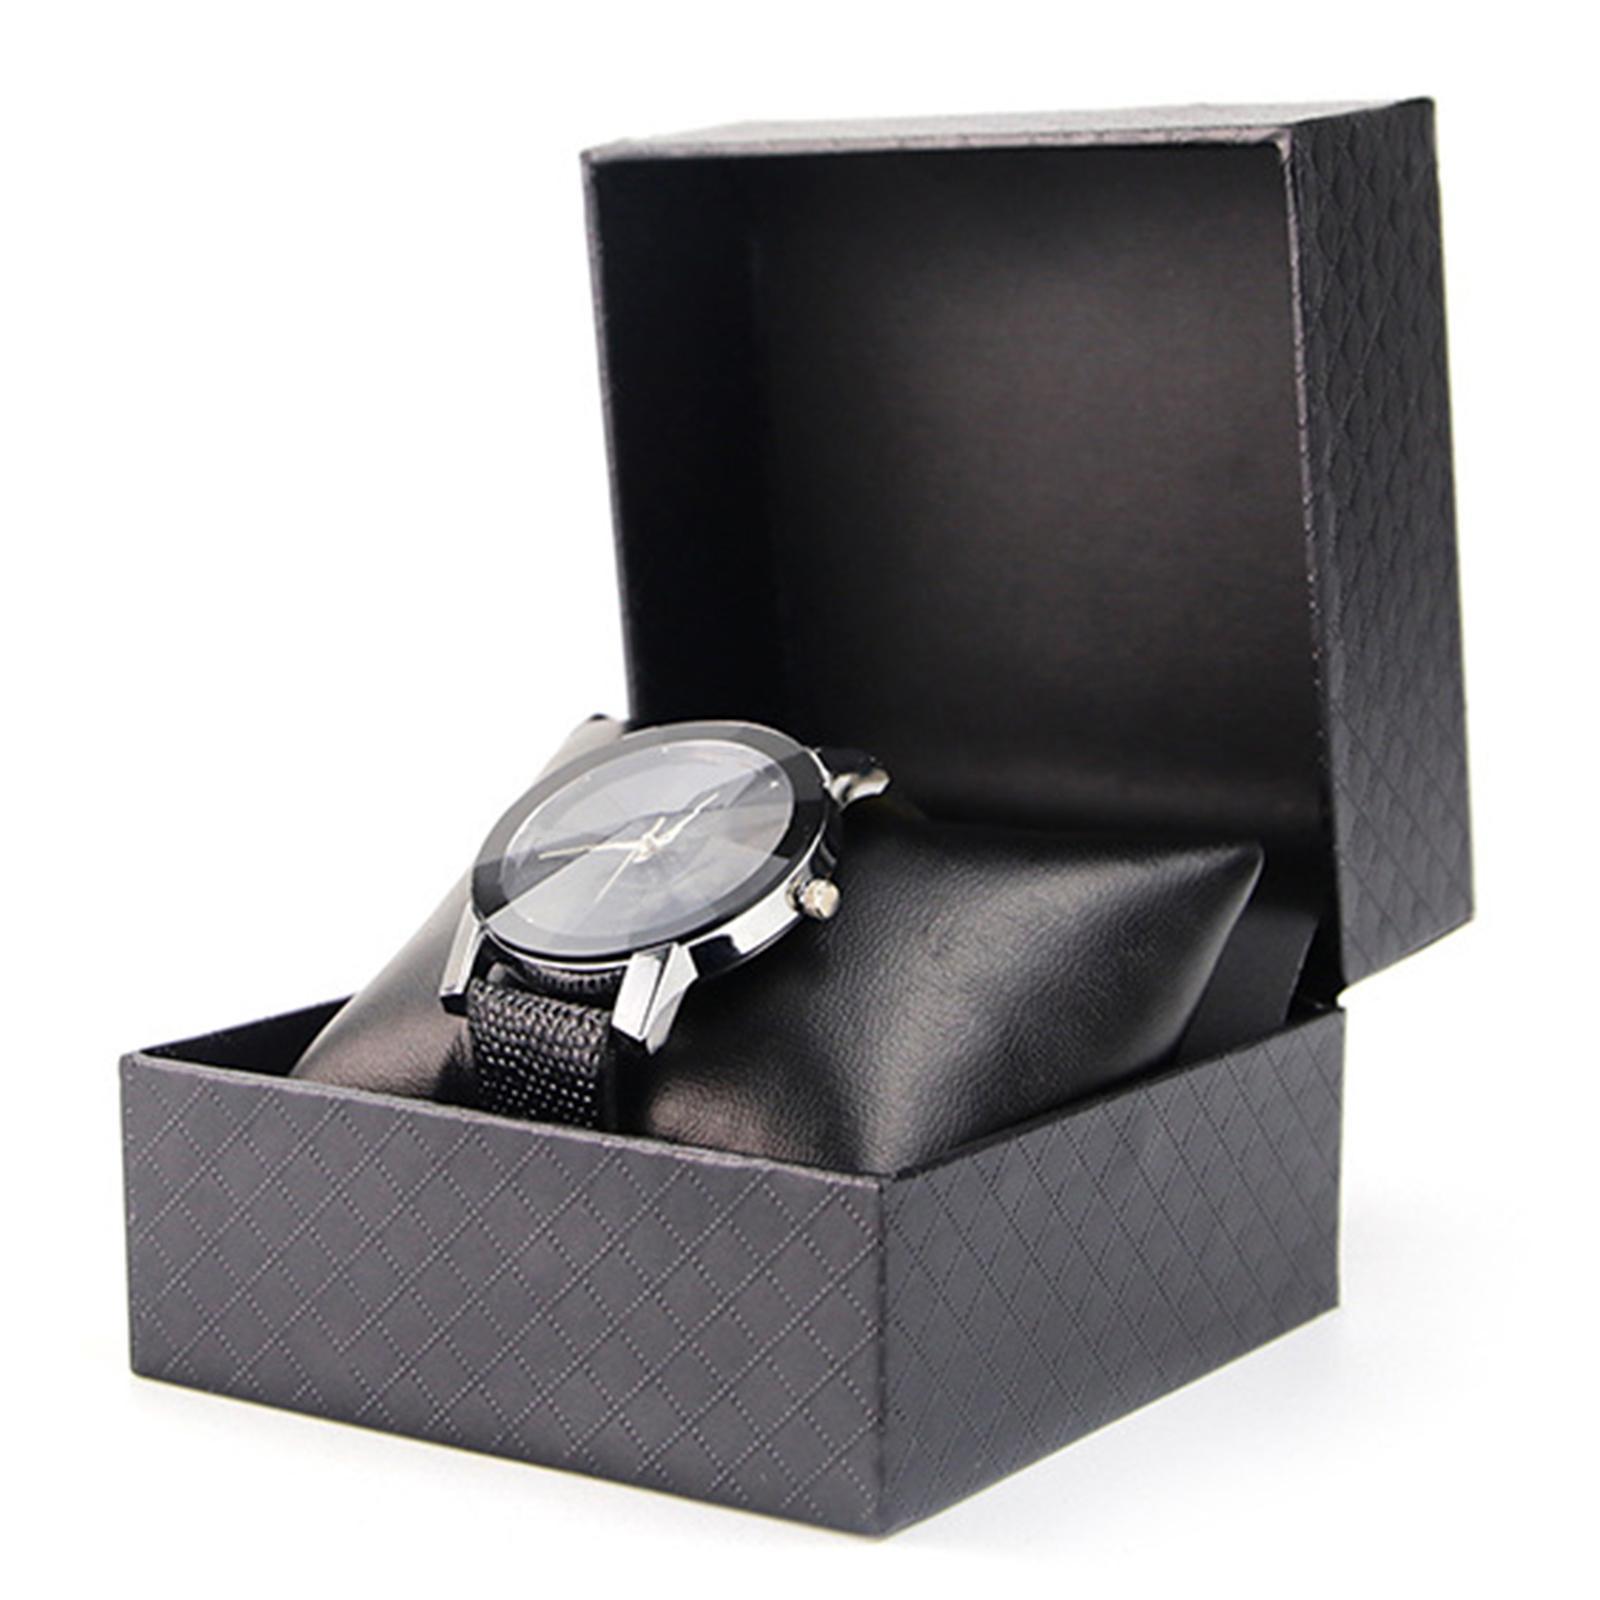 PU Leather Watch Case Display Holder Organizer Black Jewelry Box Gift Sturdy